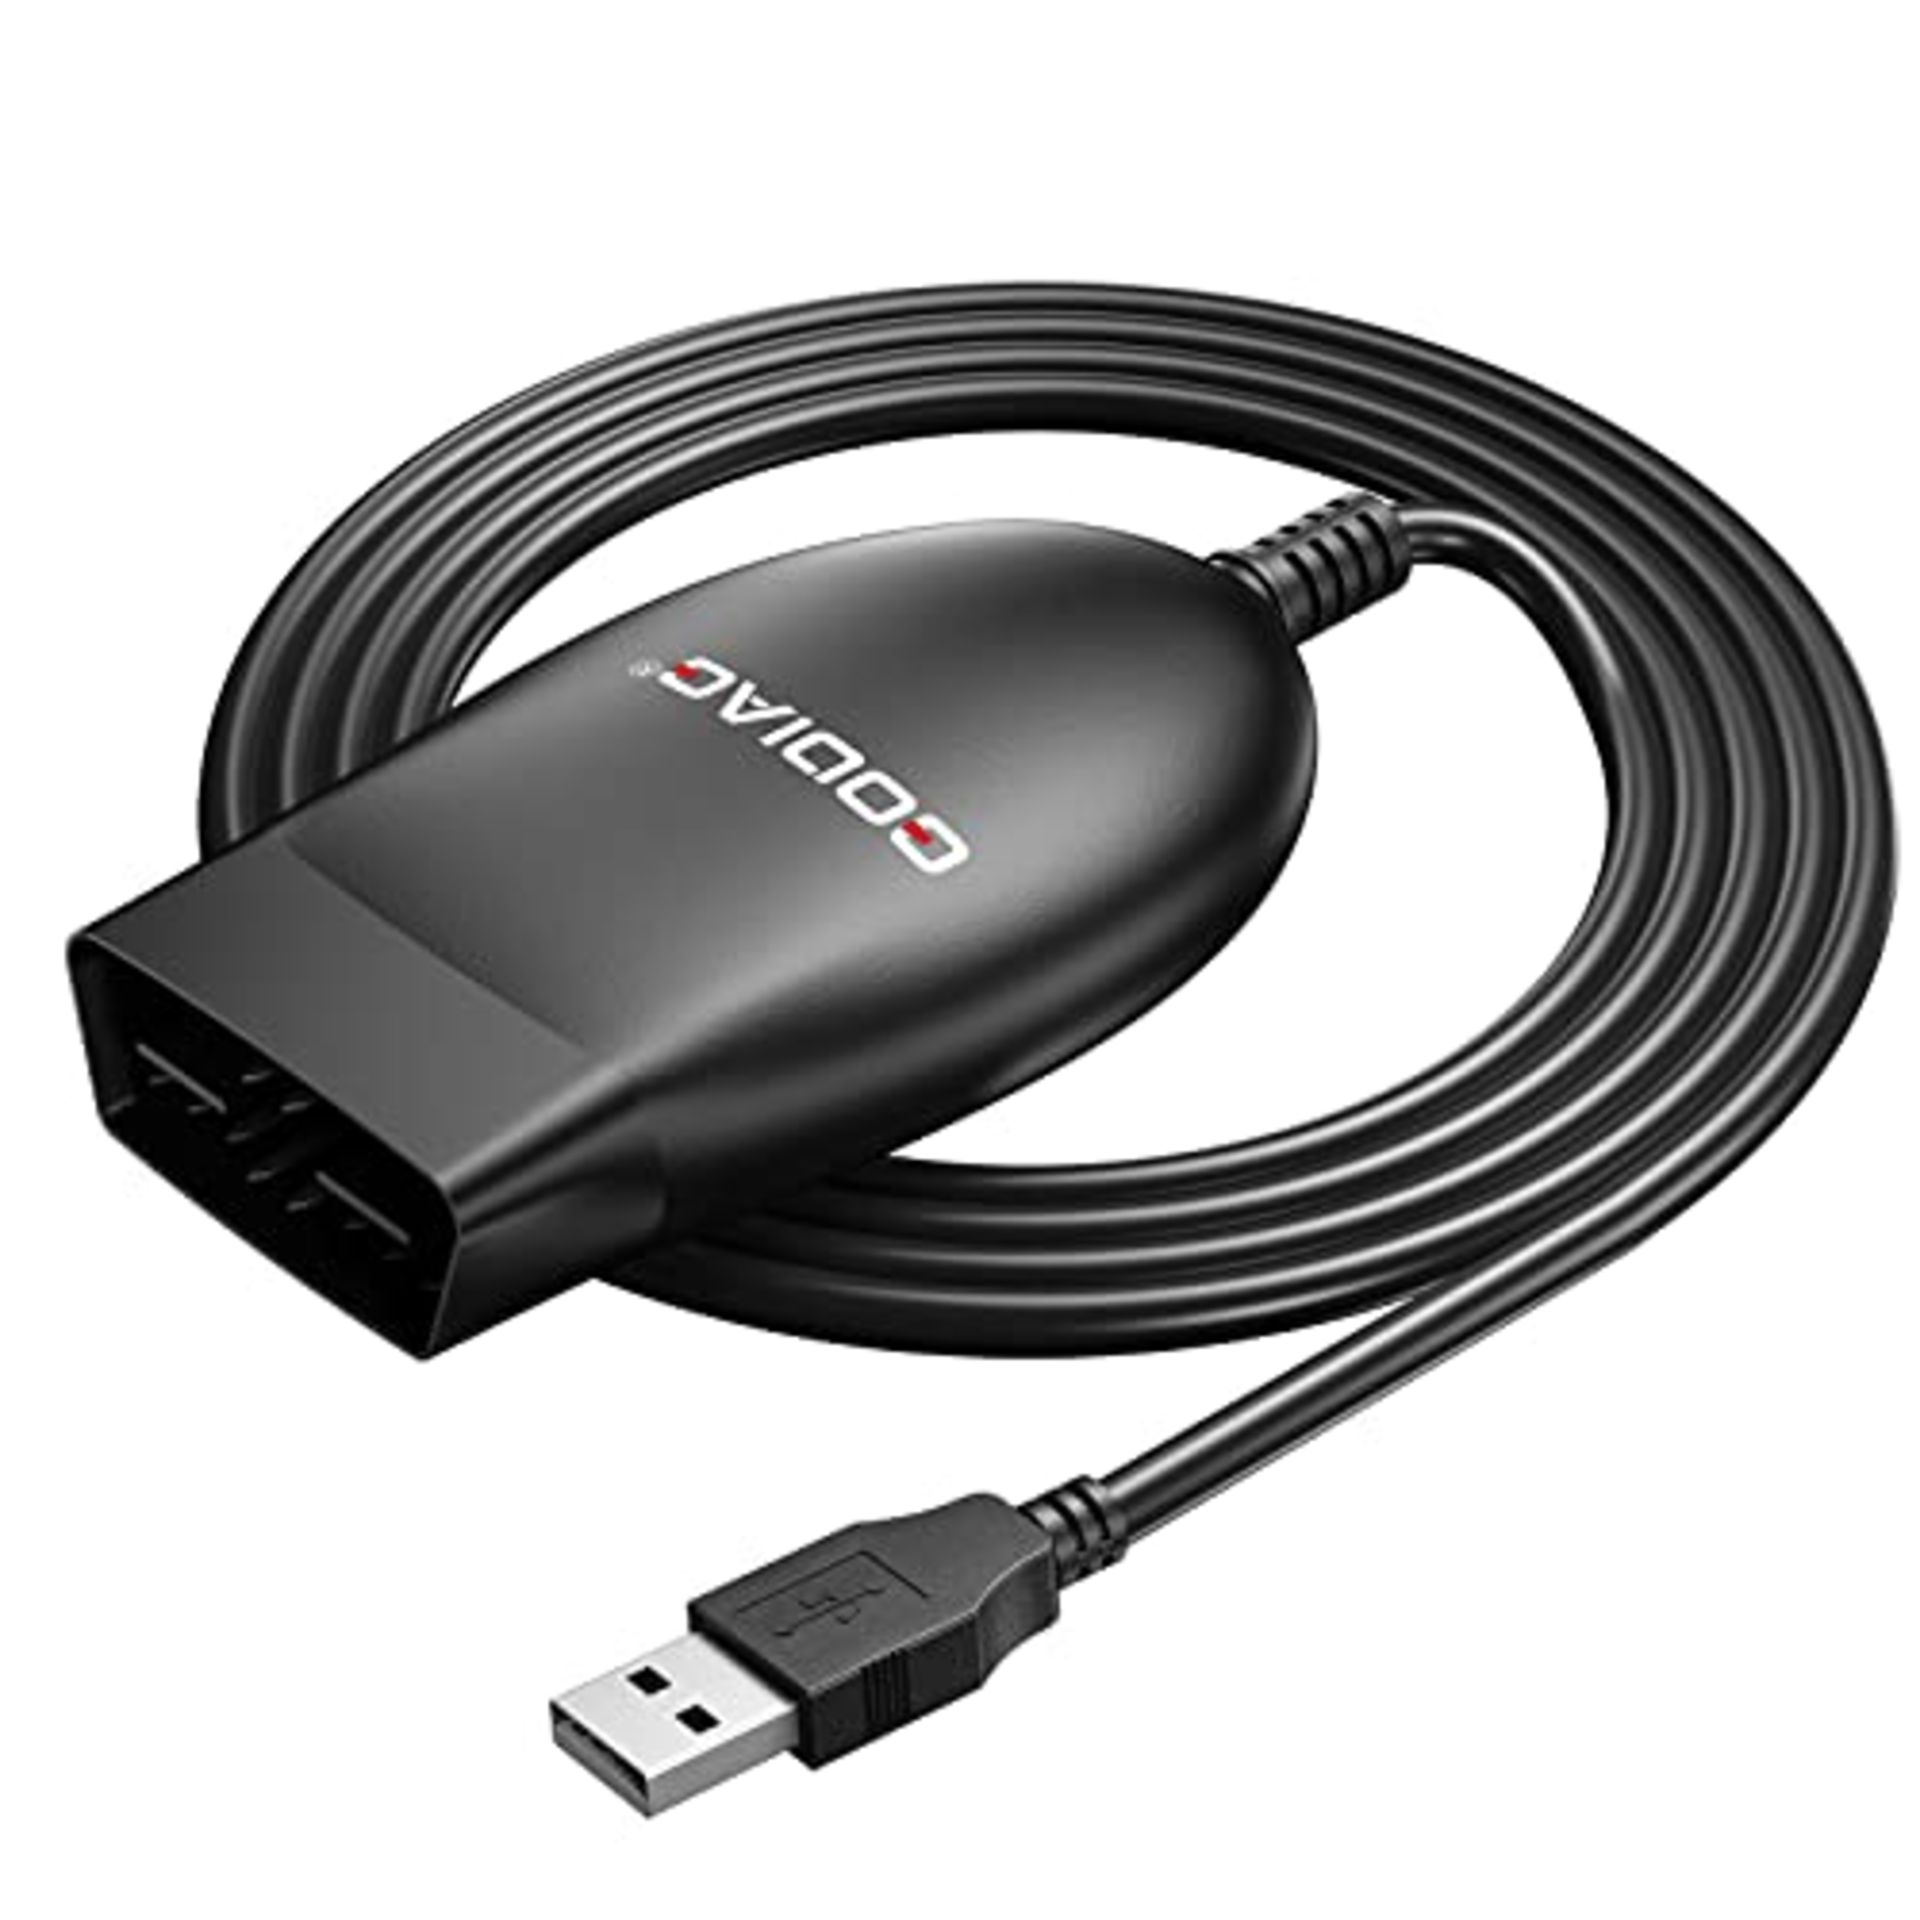 J2534 Openport 2.0 Cable, GODIAG OBD2 USB Adapter ECU Diagnostic Tool, Flash Chip Tunn - Image 3 of 8